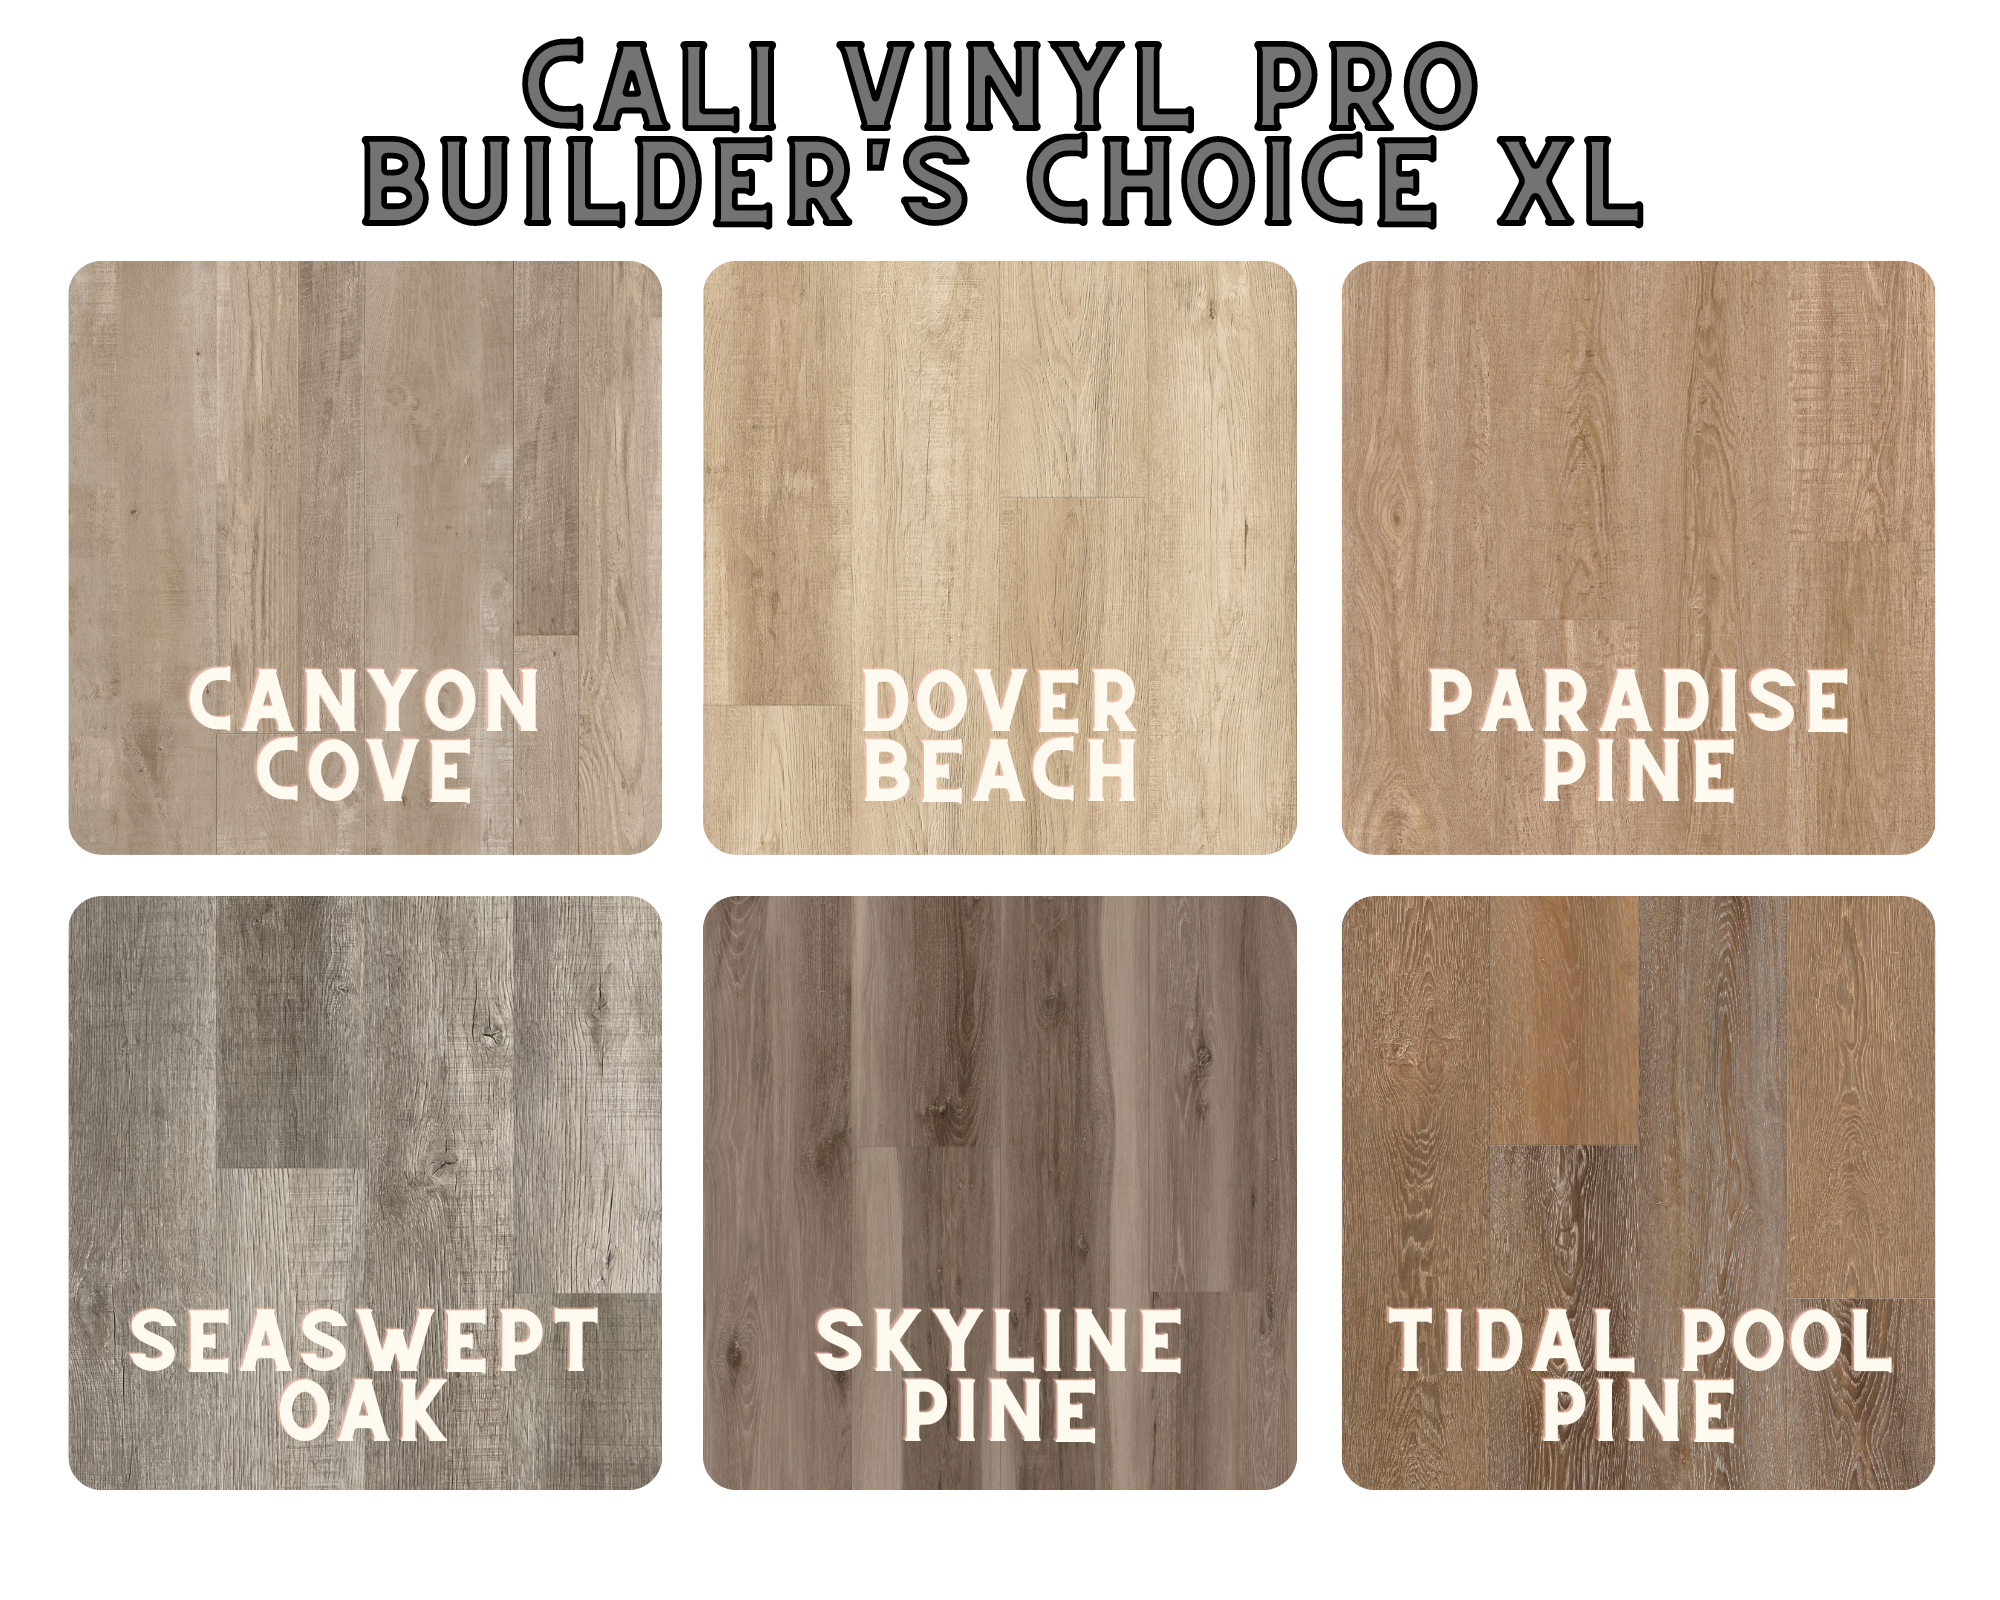 Cali Vinyl Pro Longboards Colors